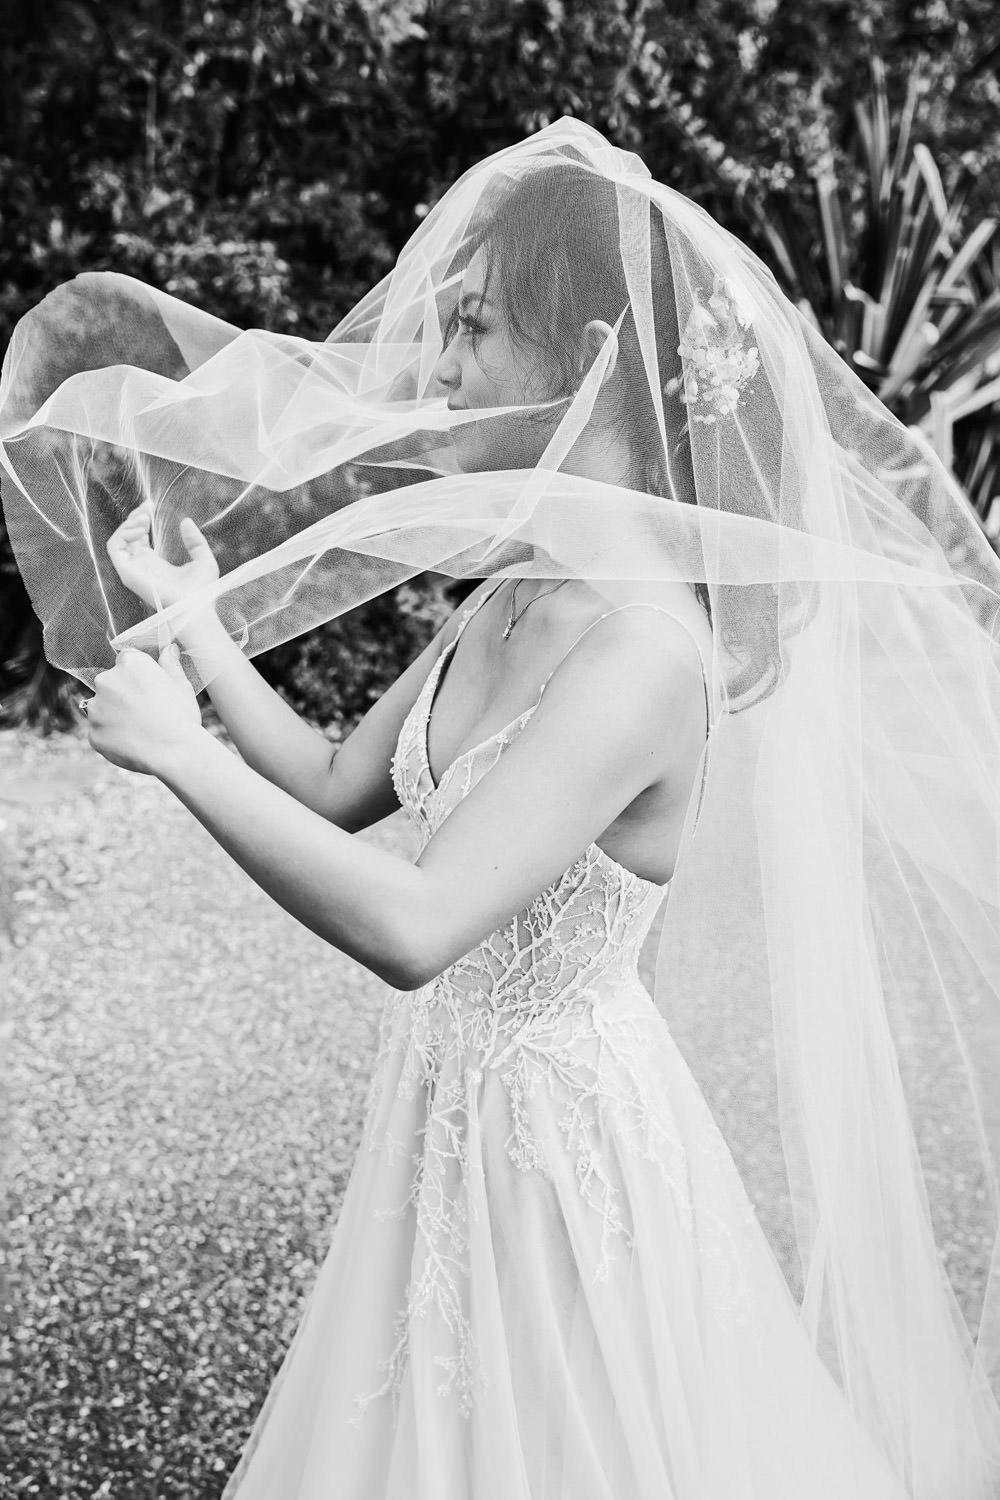 bride-placing-veil-natural, fun, romantic-wedding-photography at Sanctuary Cove-QuinceandMulberryStudios